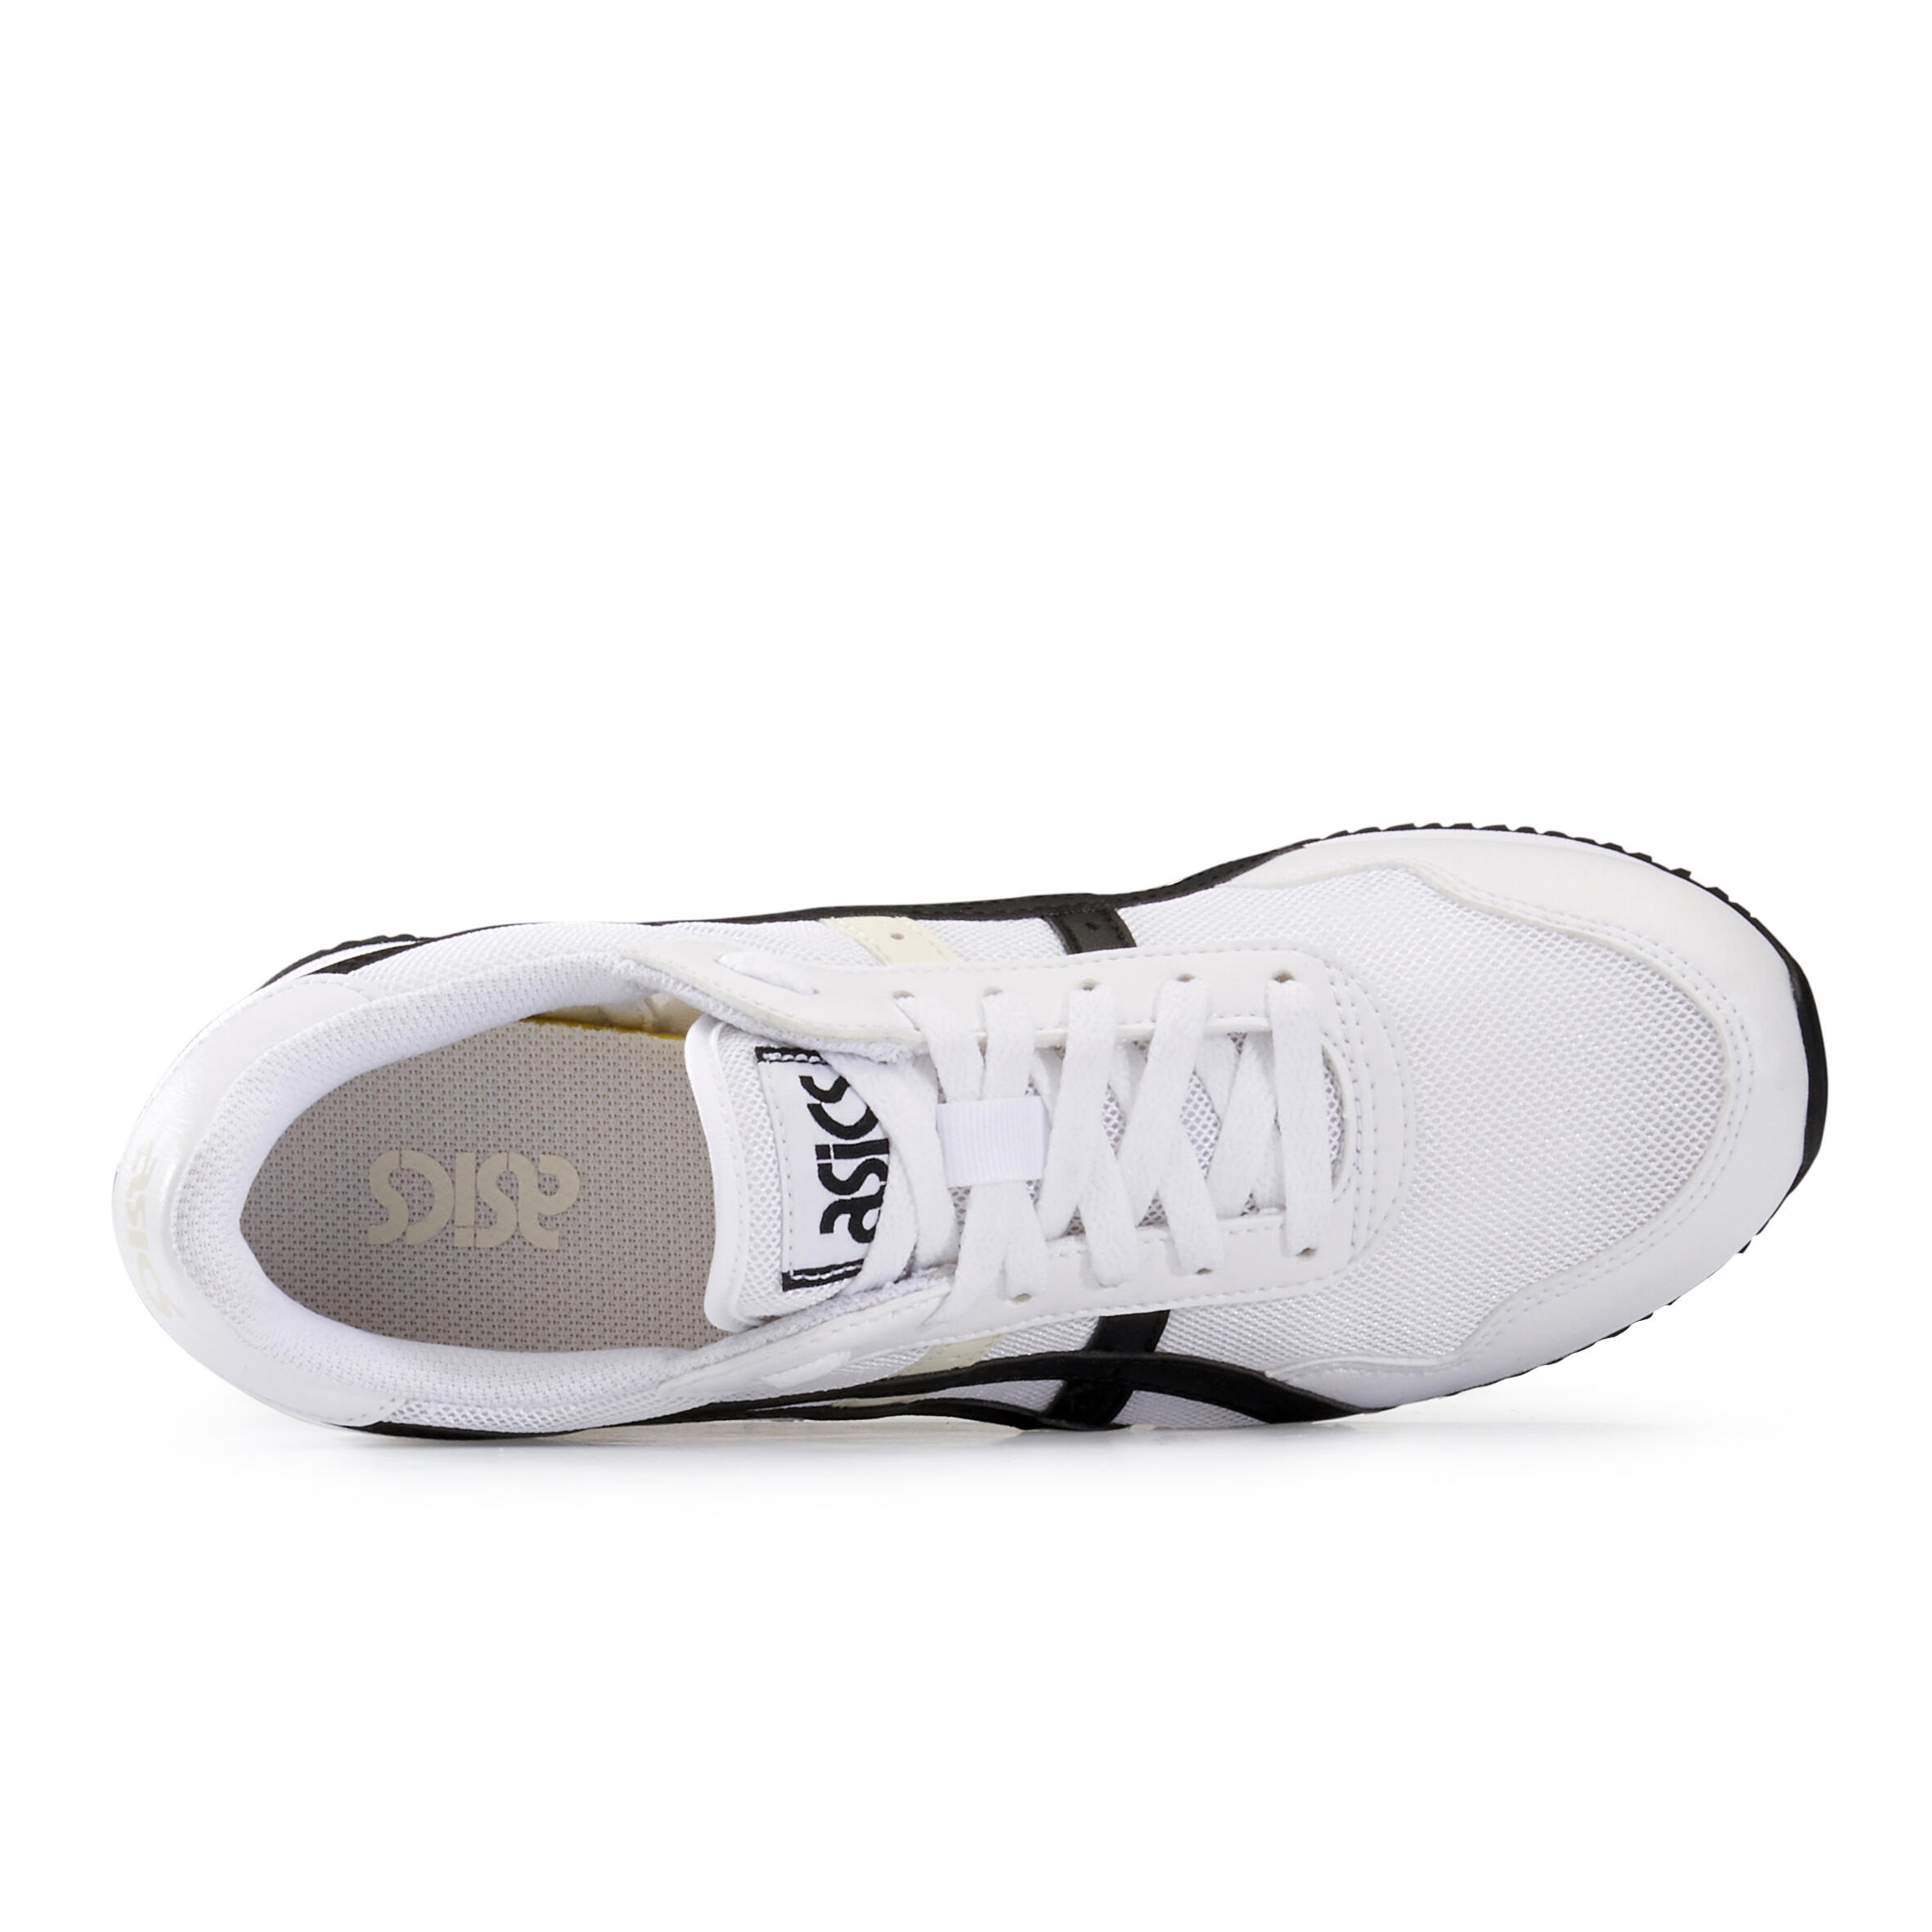 Tiger Mesh Women's Active Walking Shoes Asics - white/black 4/8